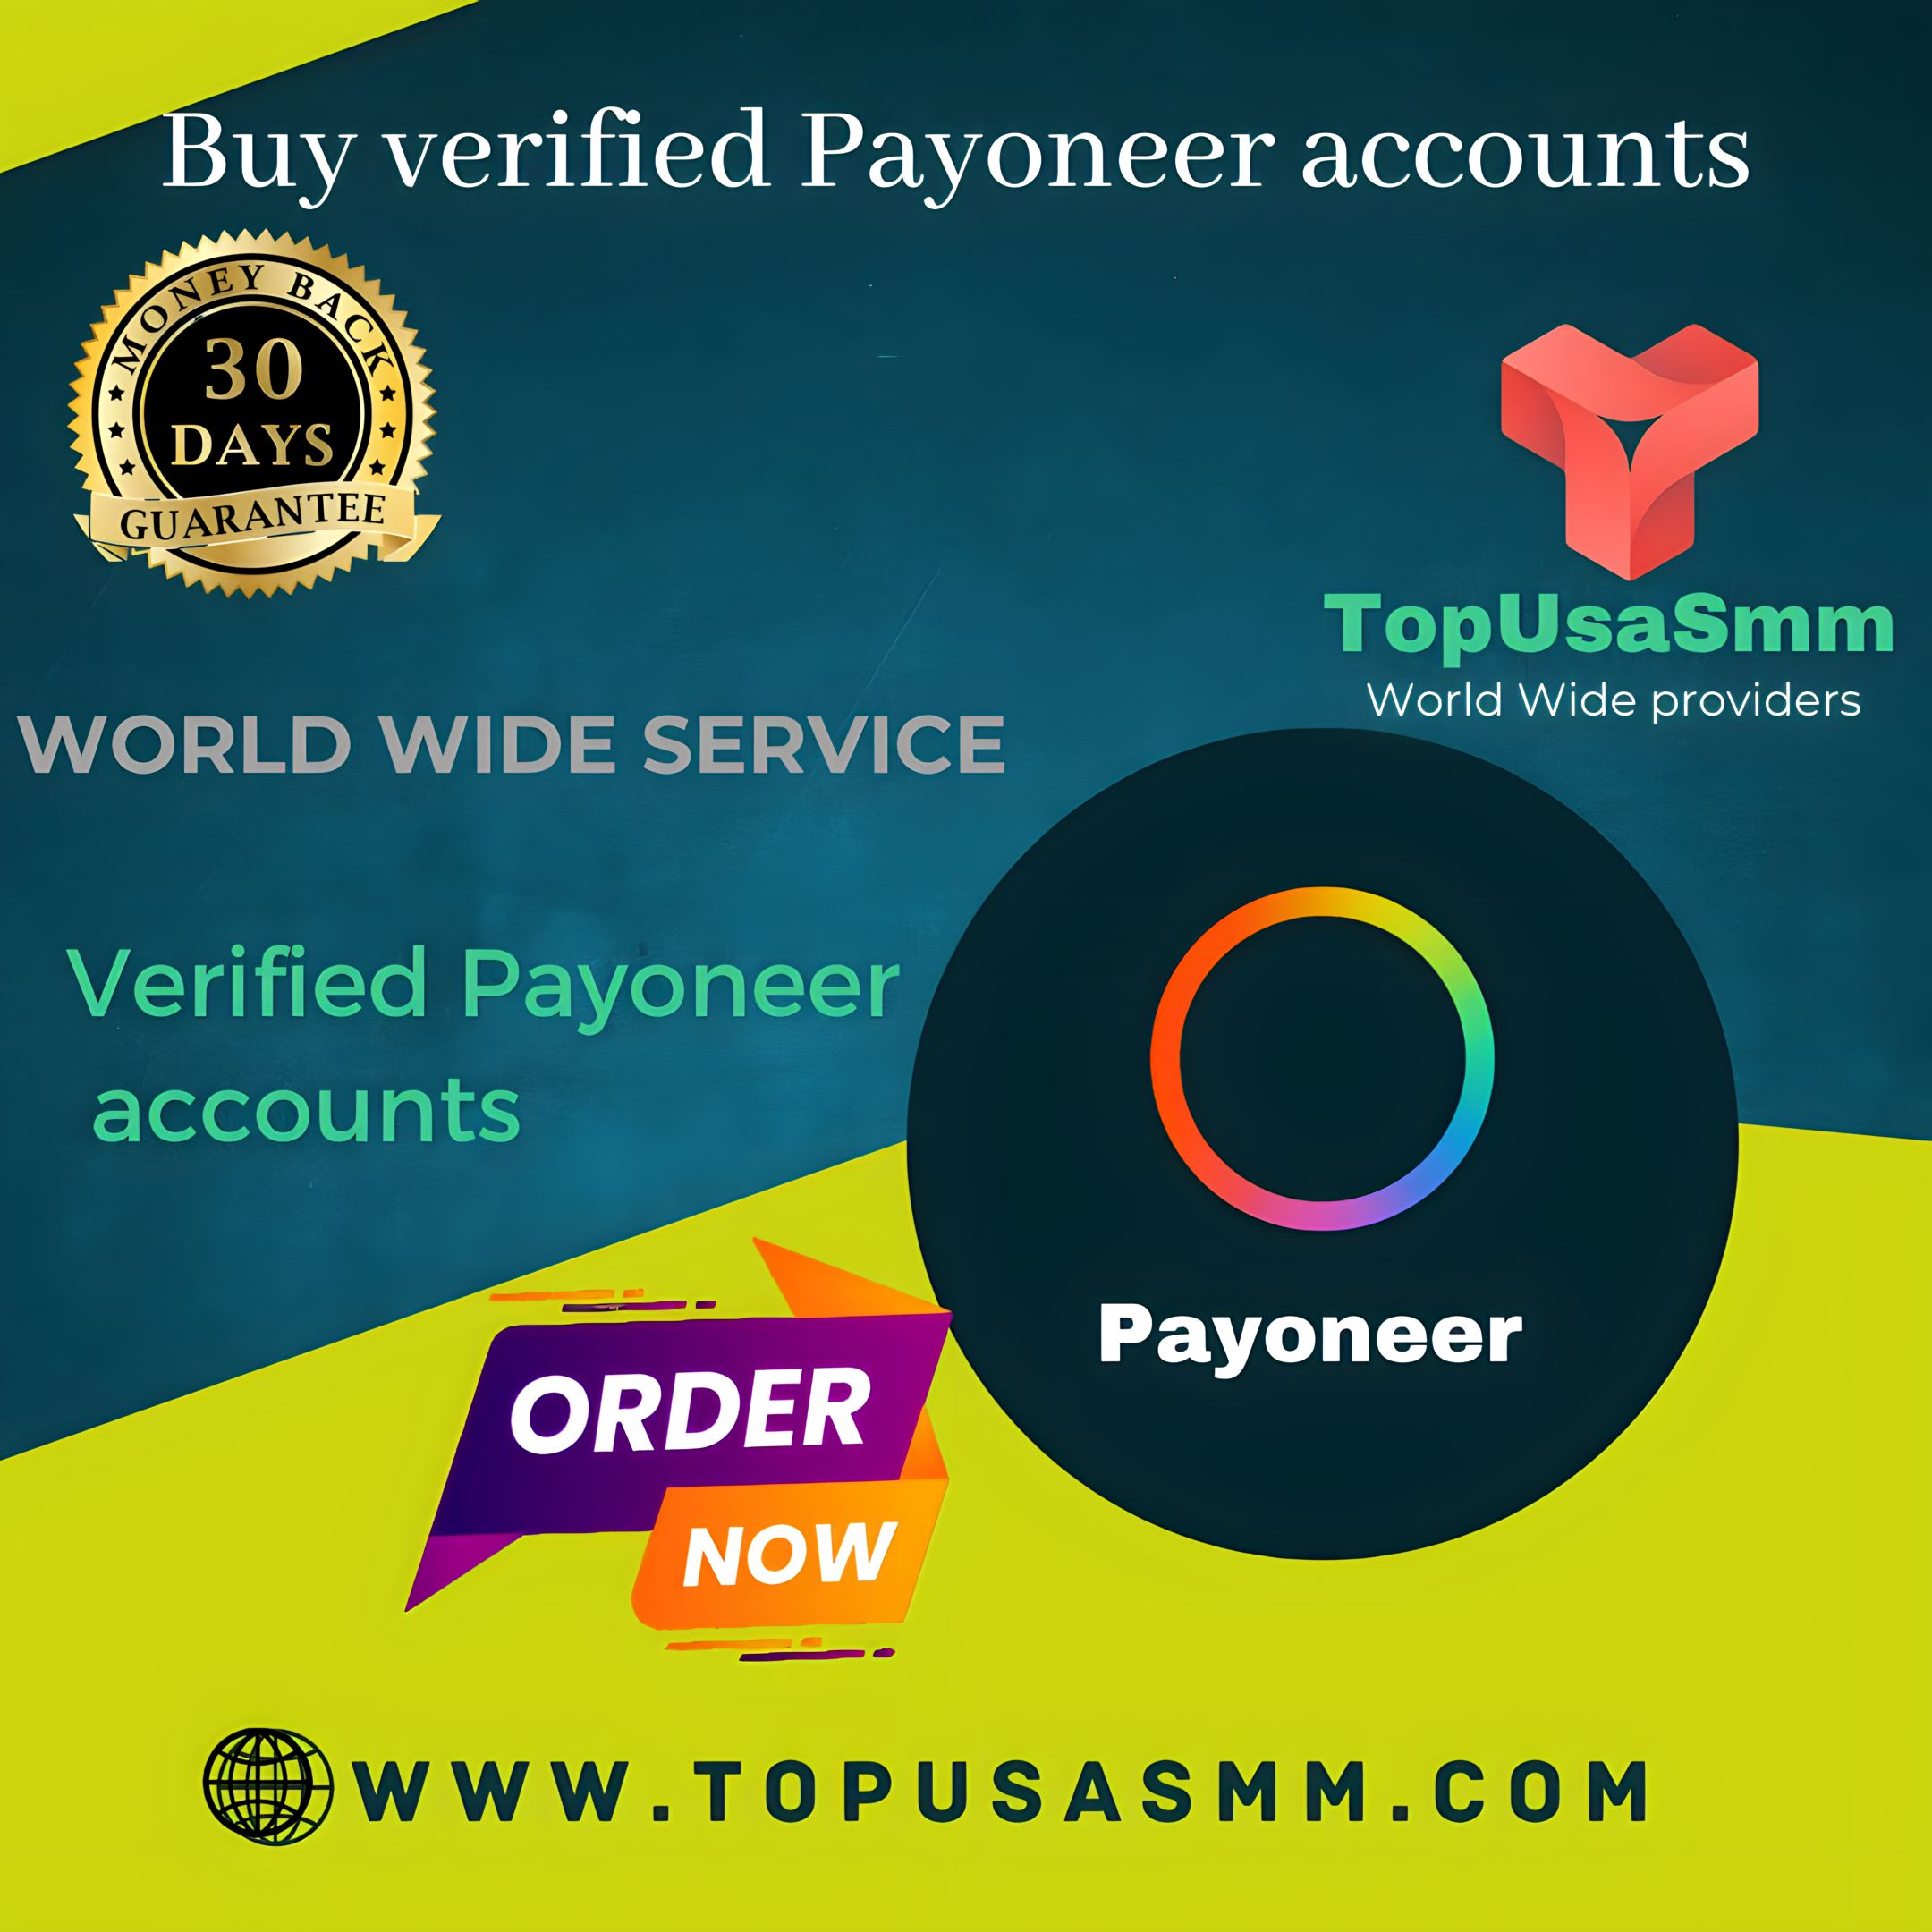 Buy Verified Payoneer Accounts - Top USA SMM